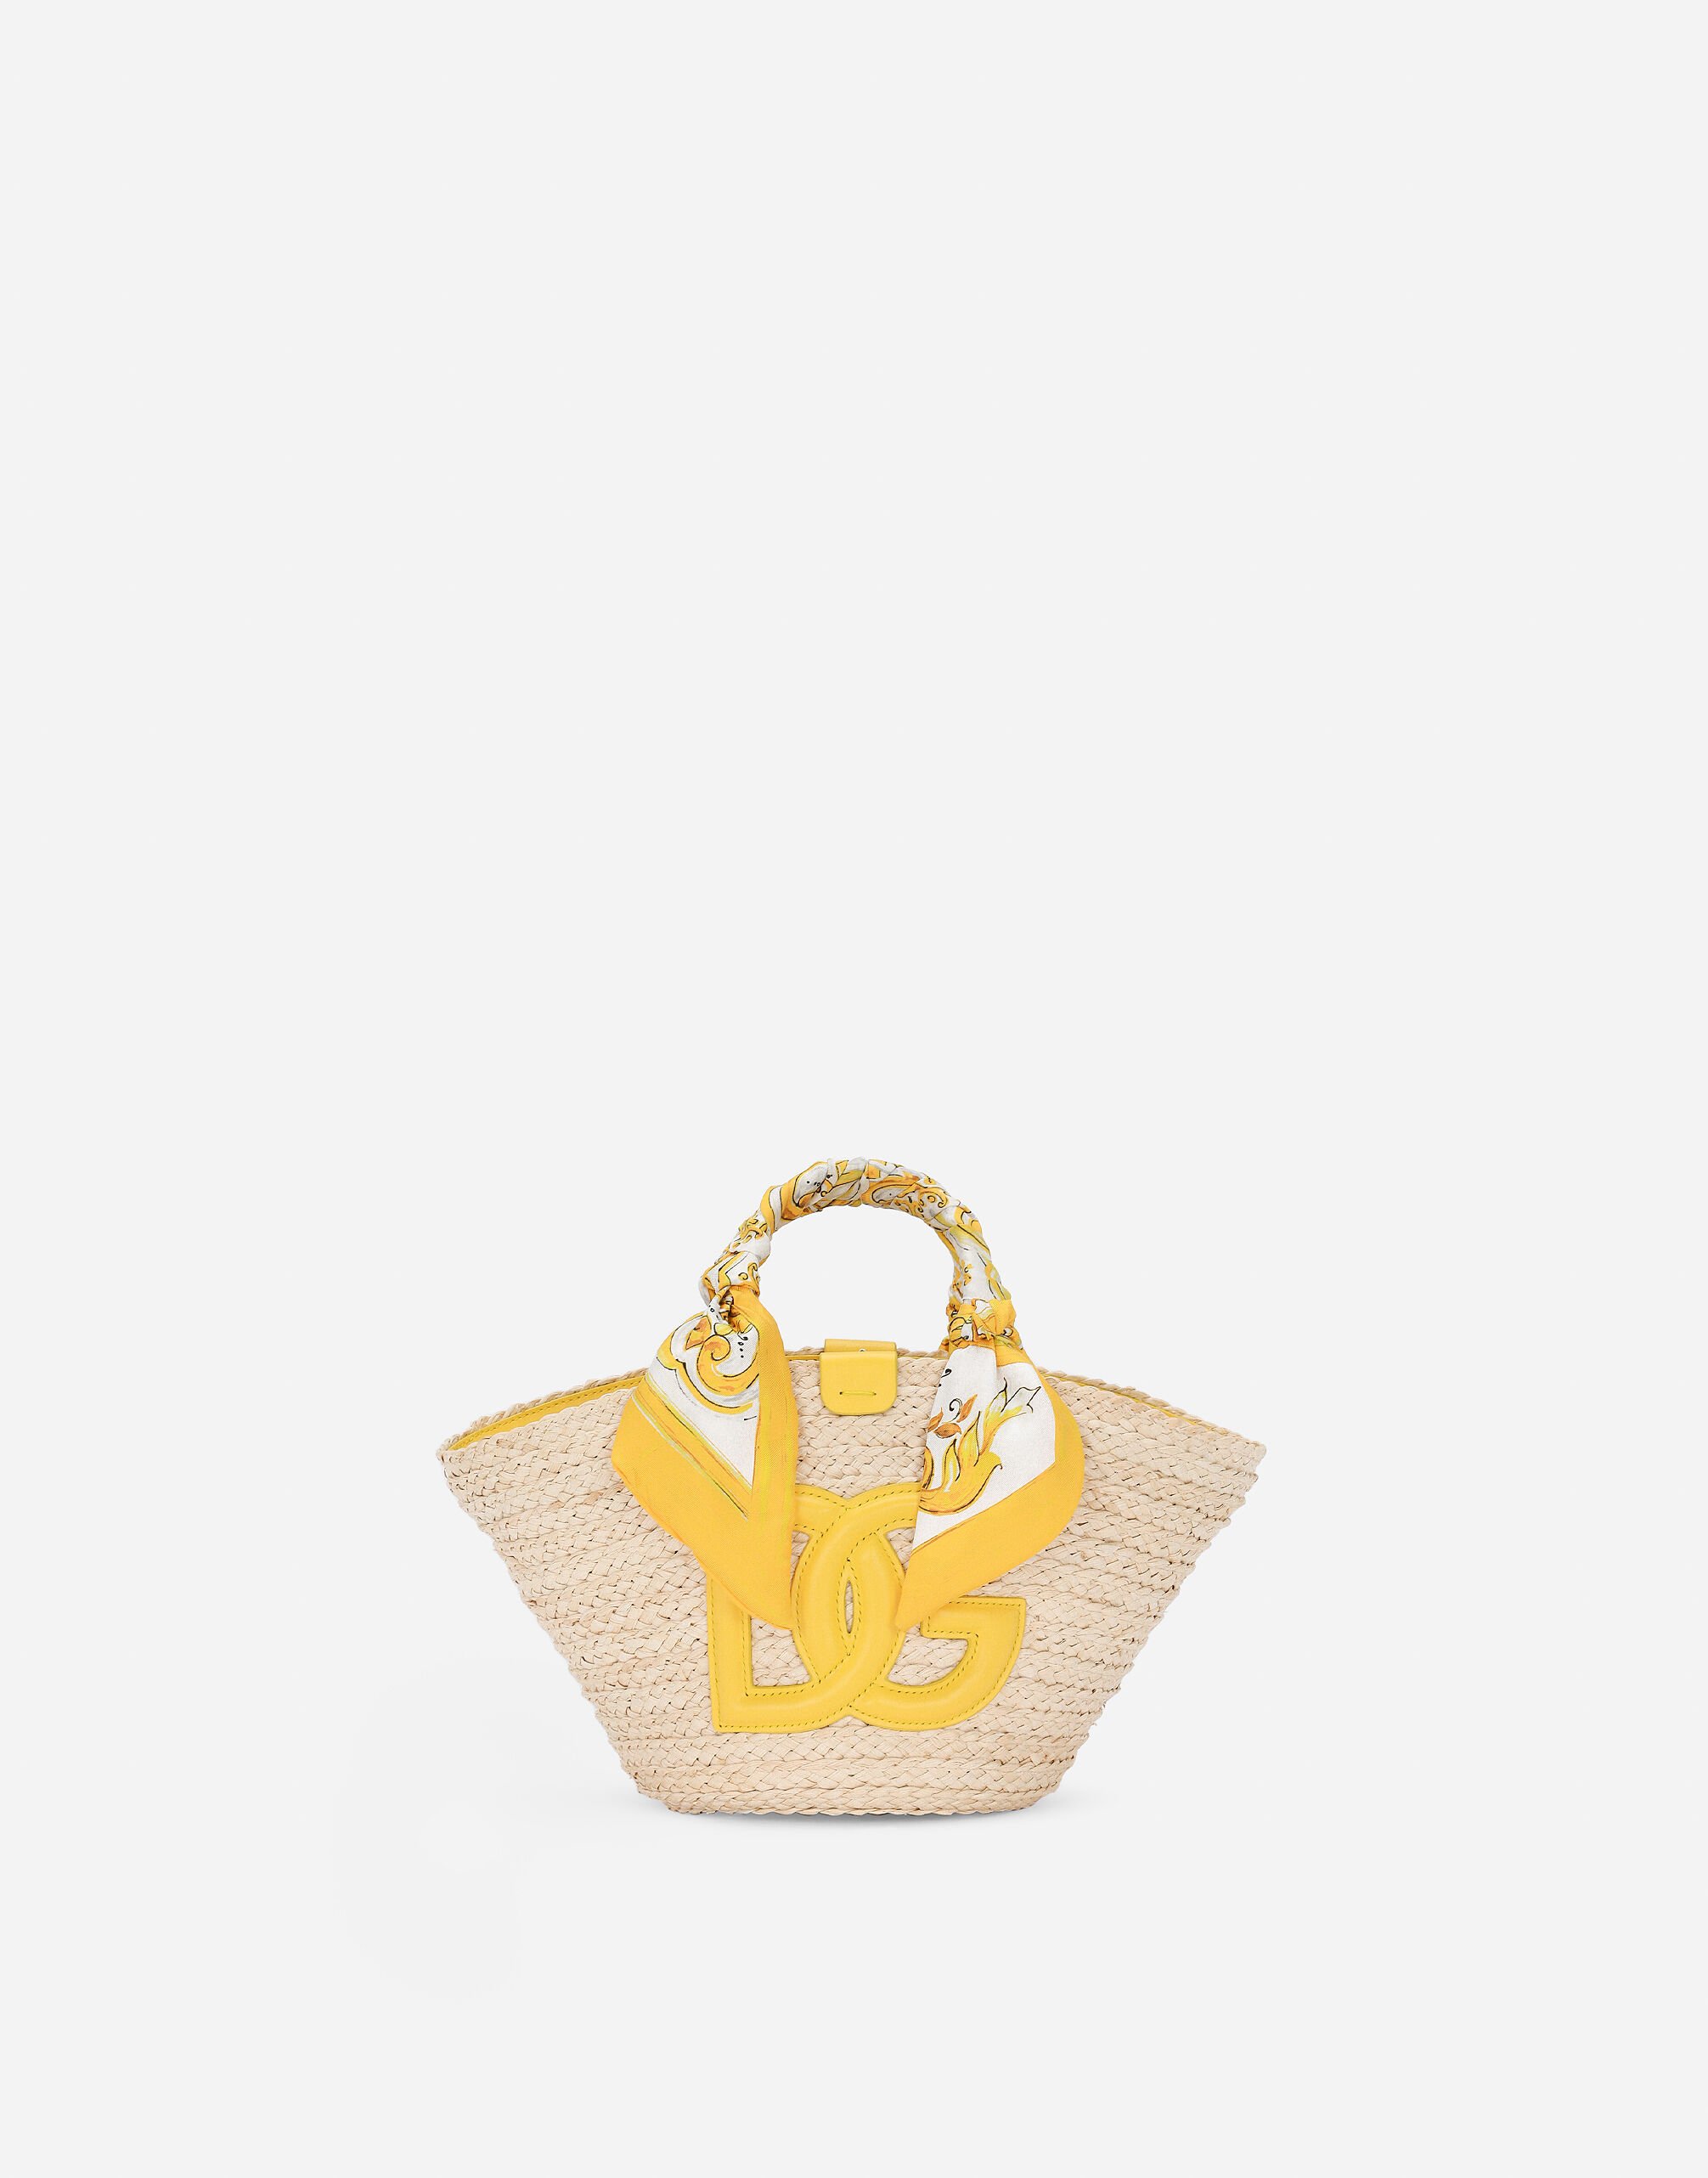 Dolce & Gabbana حقيبة تسوق كيندرا صغيرة متعدد الألوان BB7655A4547